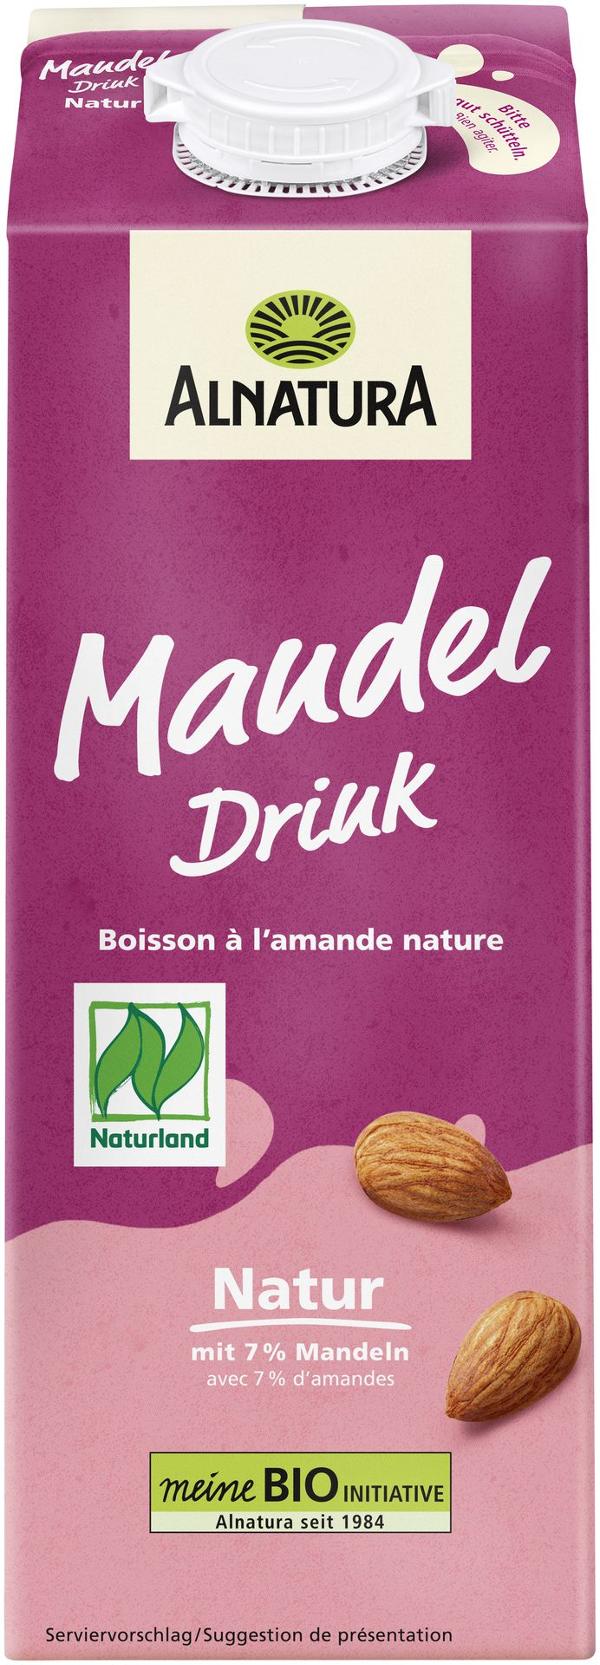 Produktfoto zu Mandel Drink natur 1l Alnatura